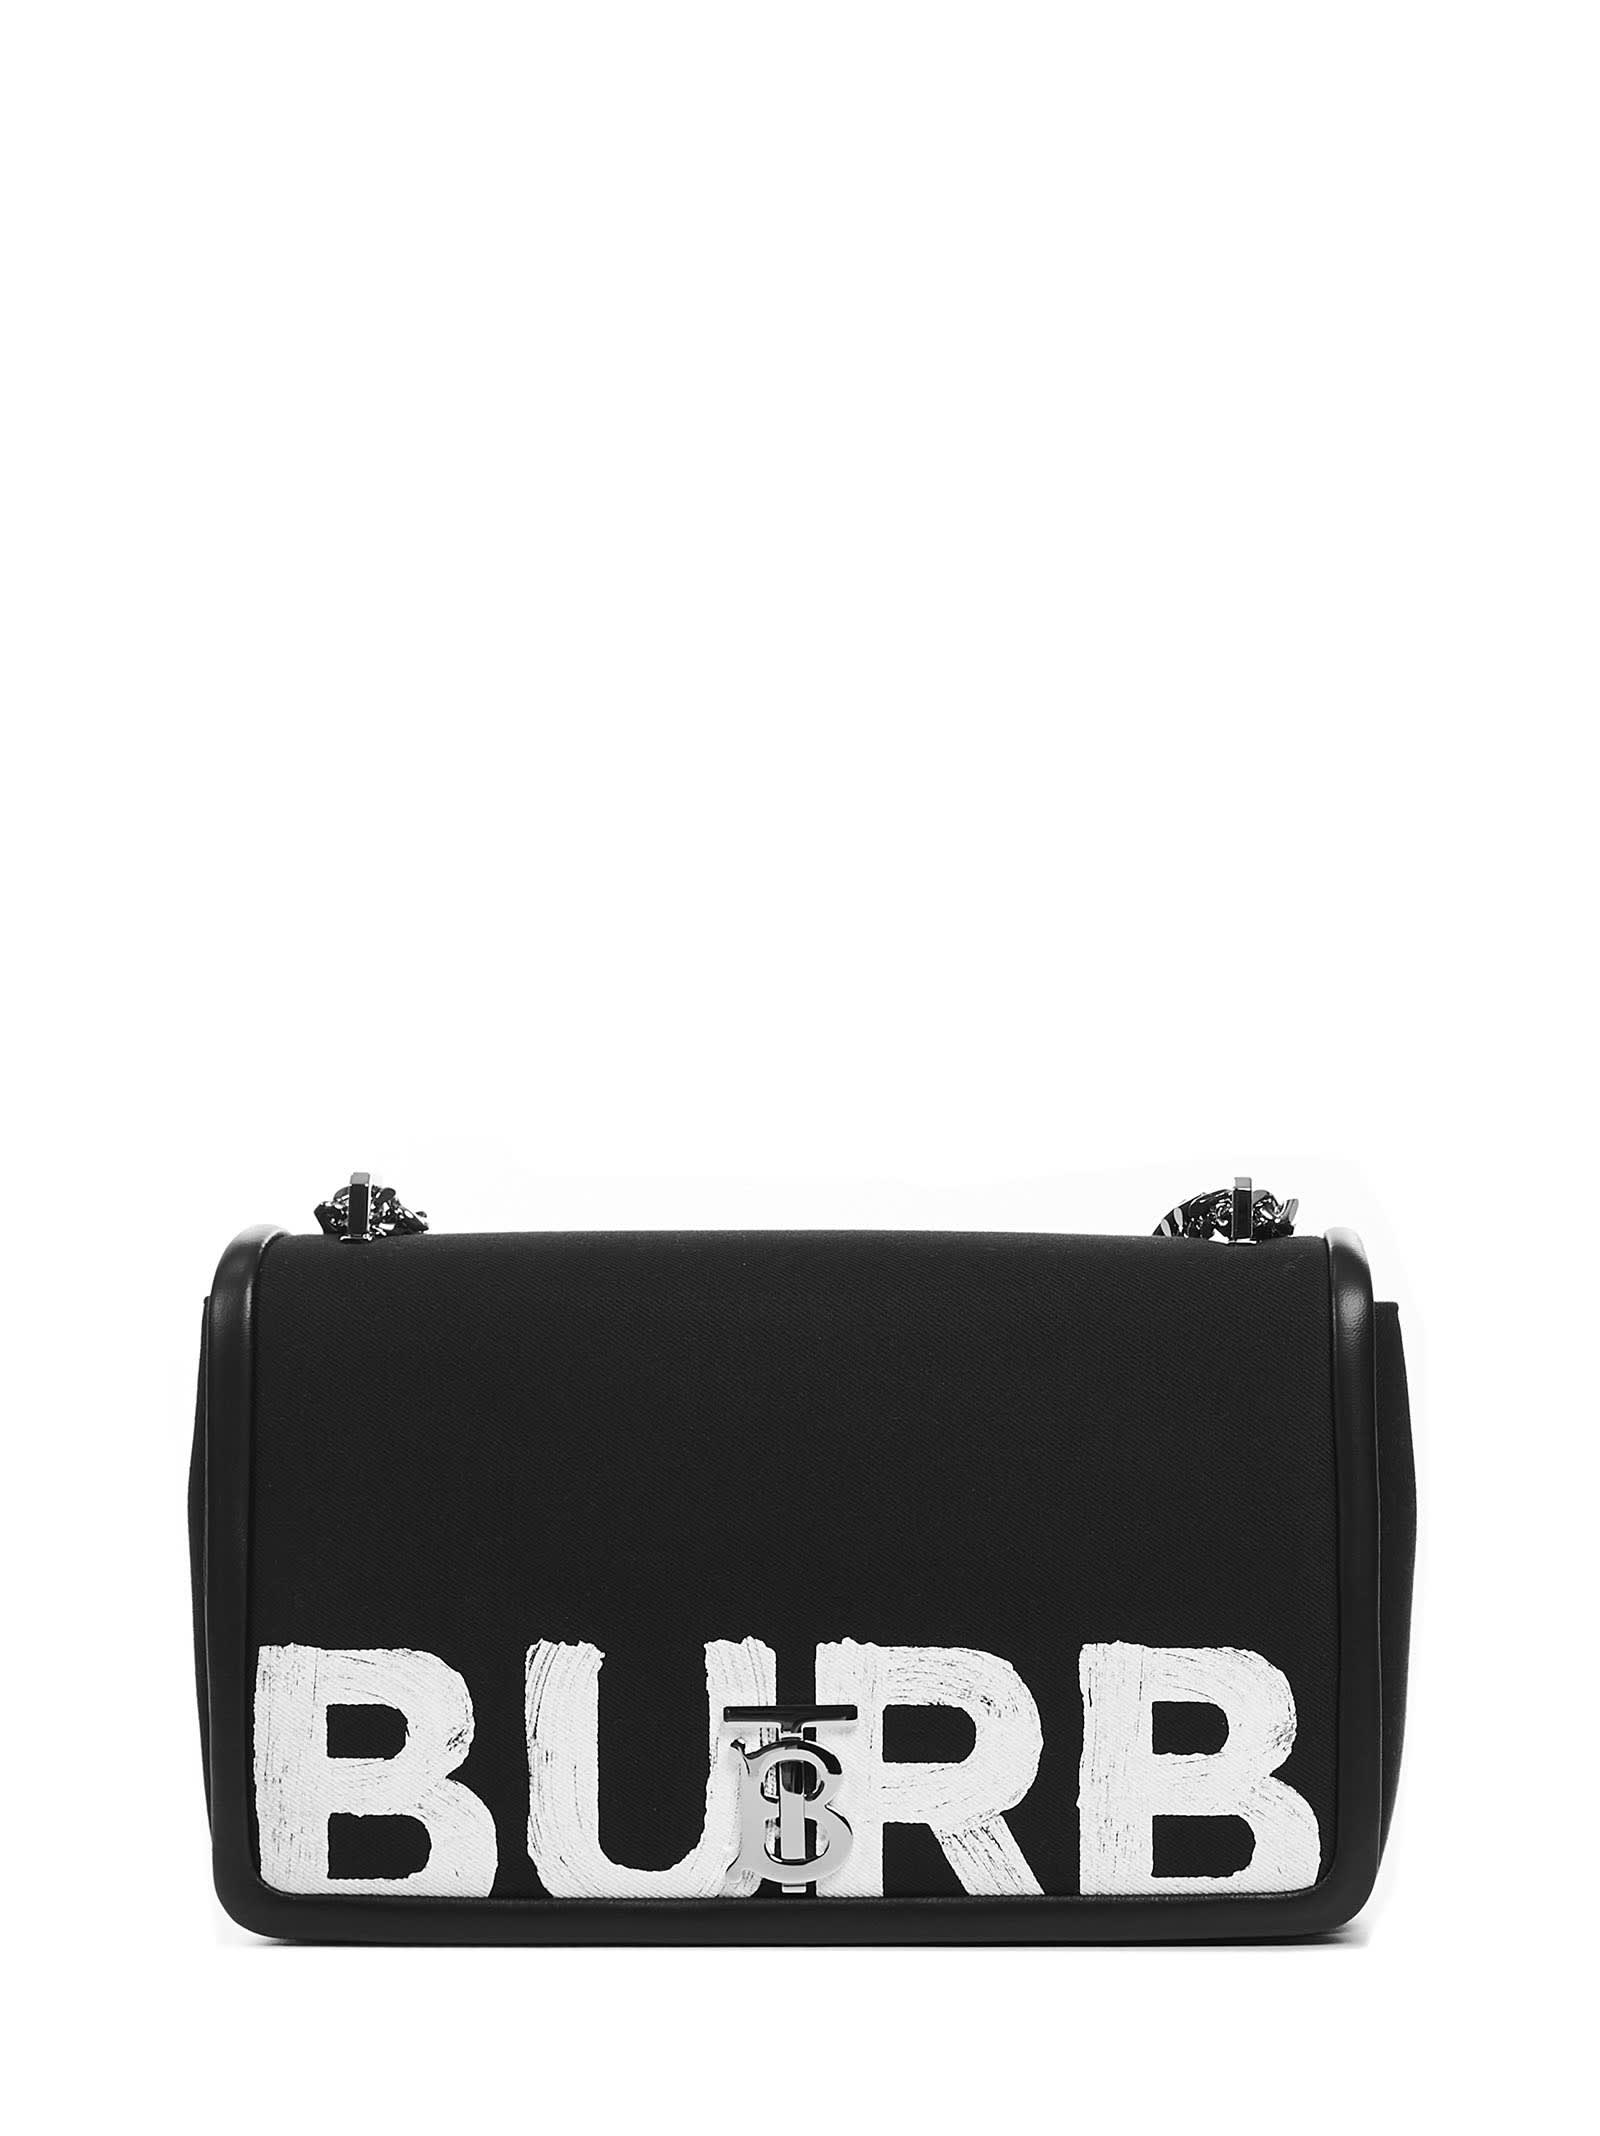 Burberry Lola Medium Shoulder Bag